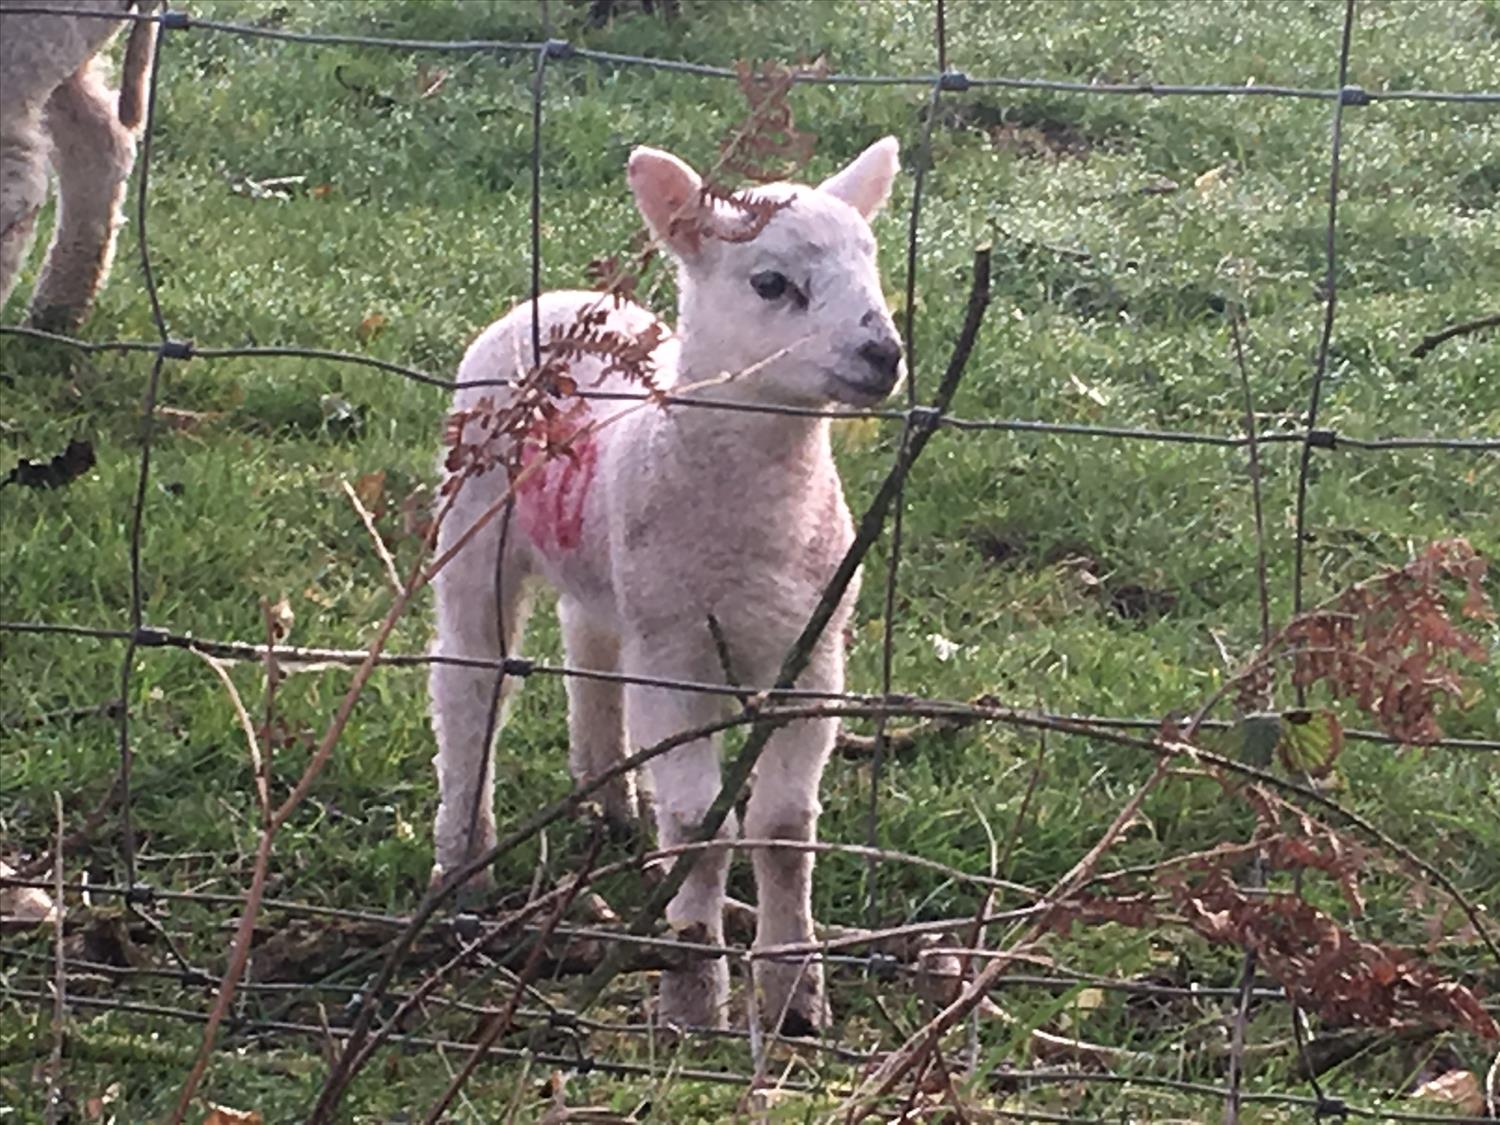 Spring lambs East Runton @NorfolkCoastline